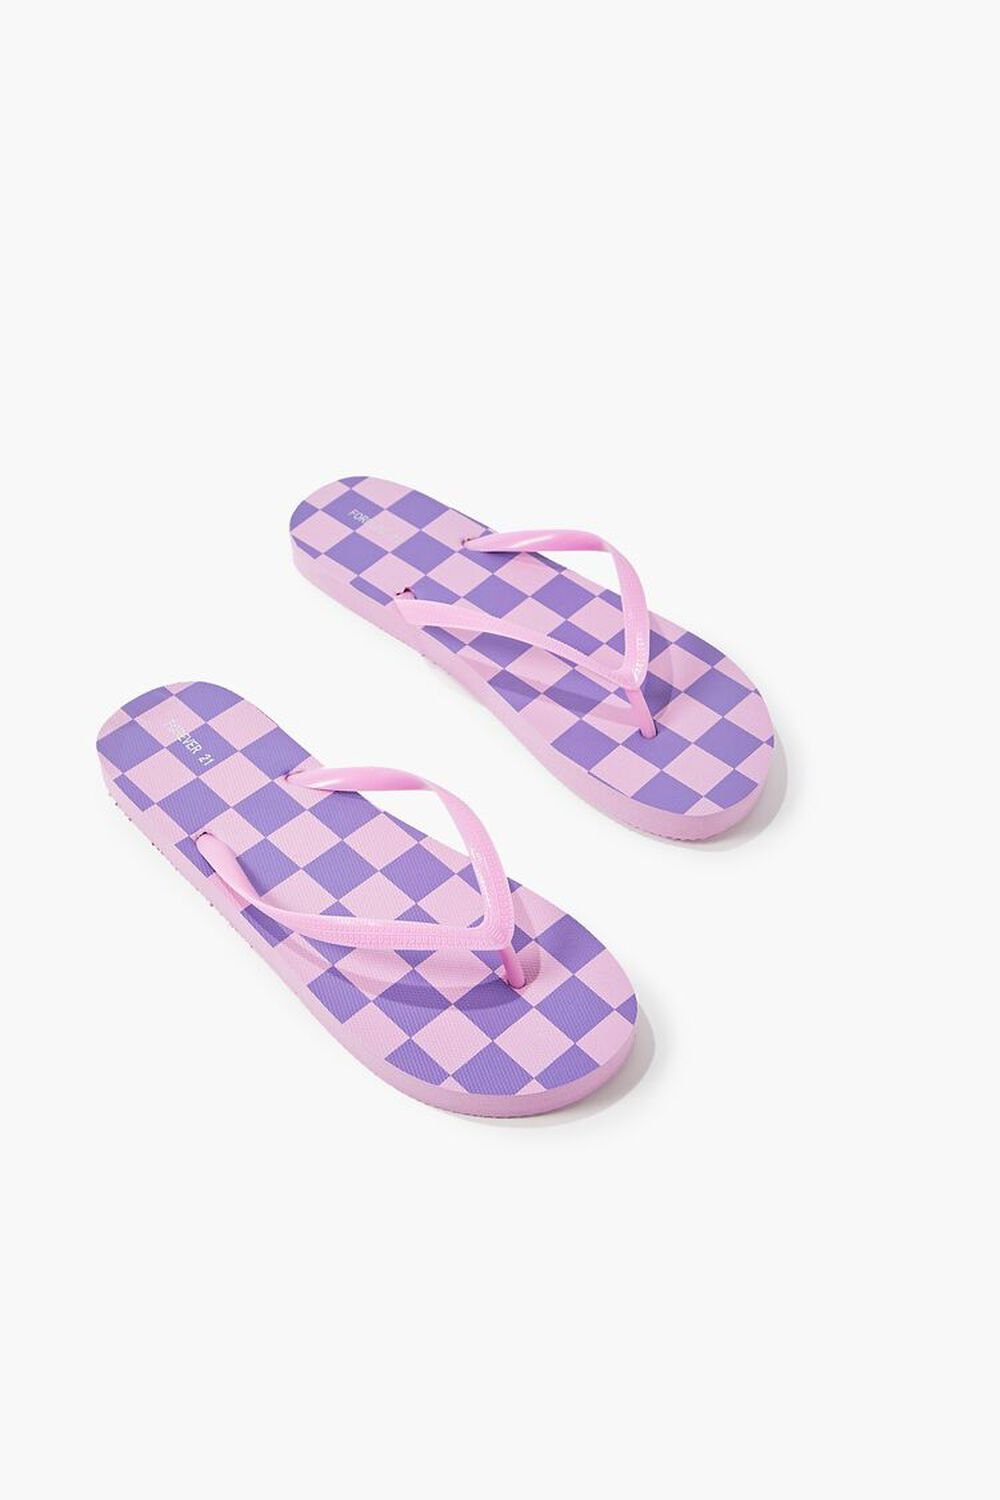 LAVENDER/MULTI Checkered Thong Flip-Flops, image 1